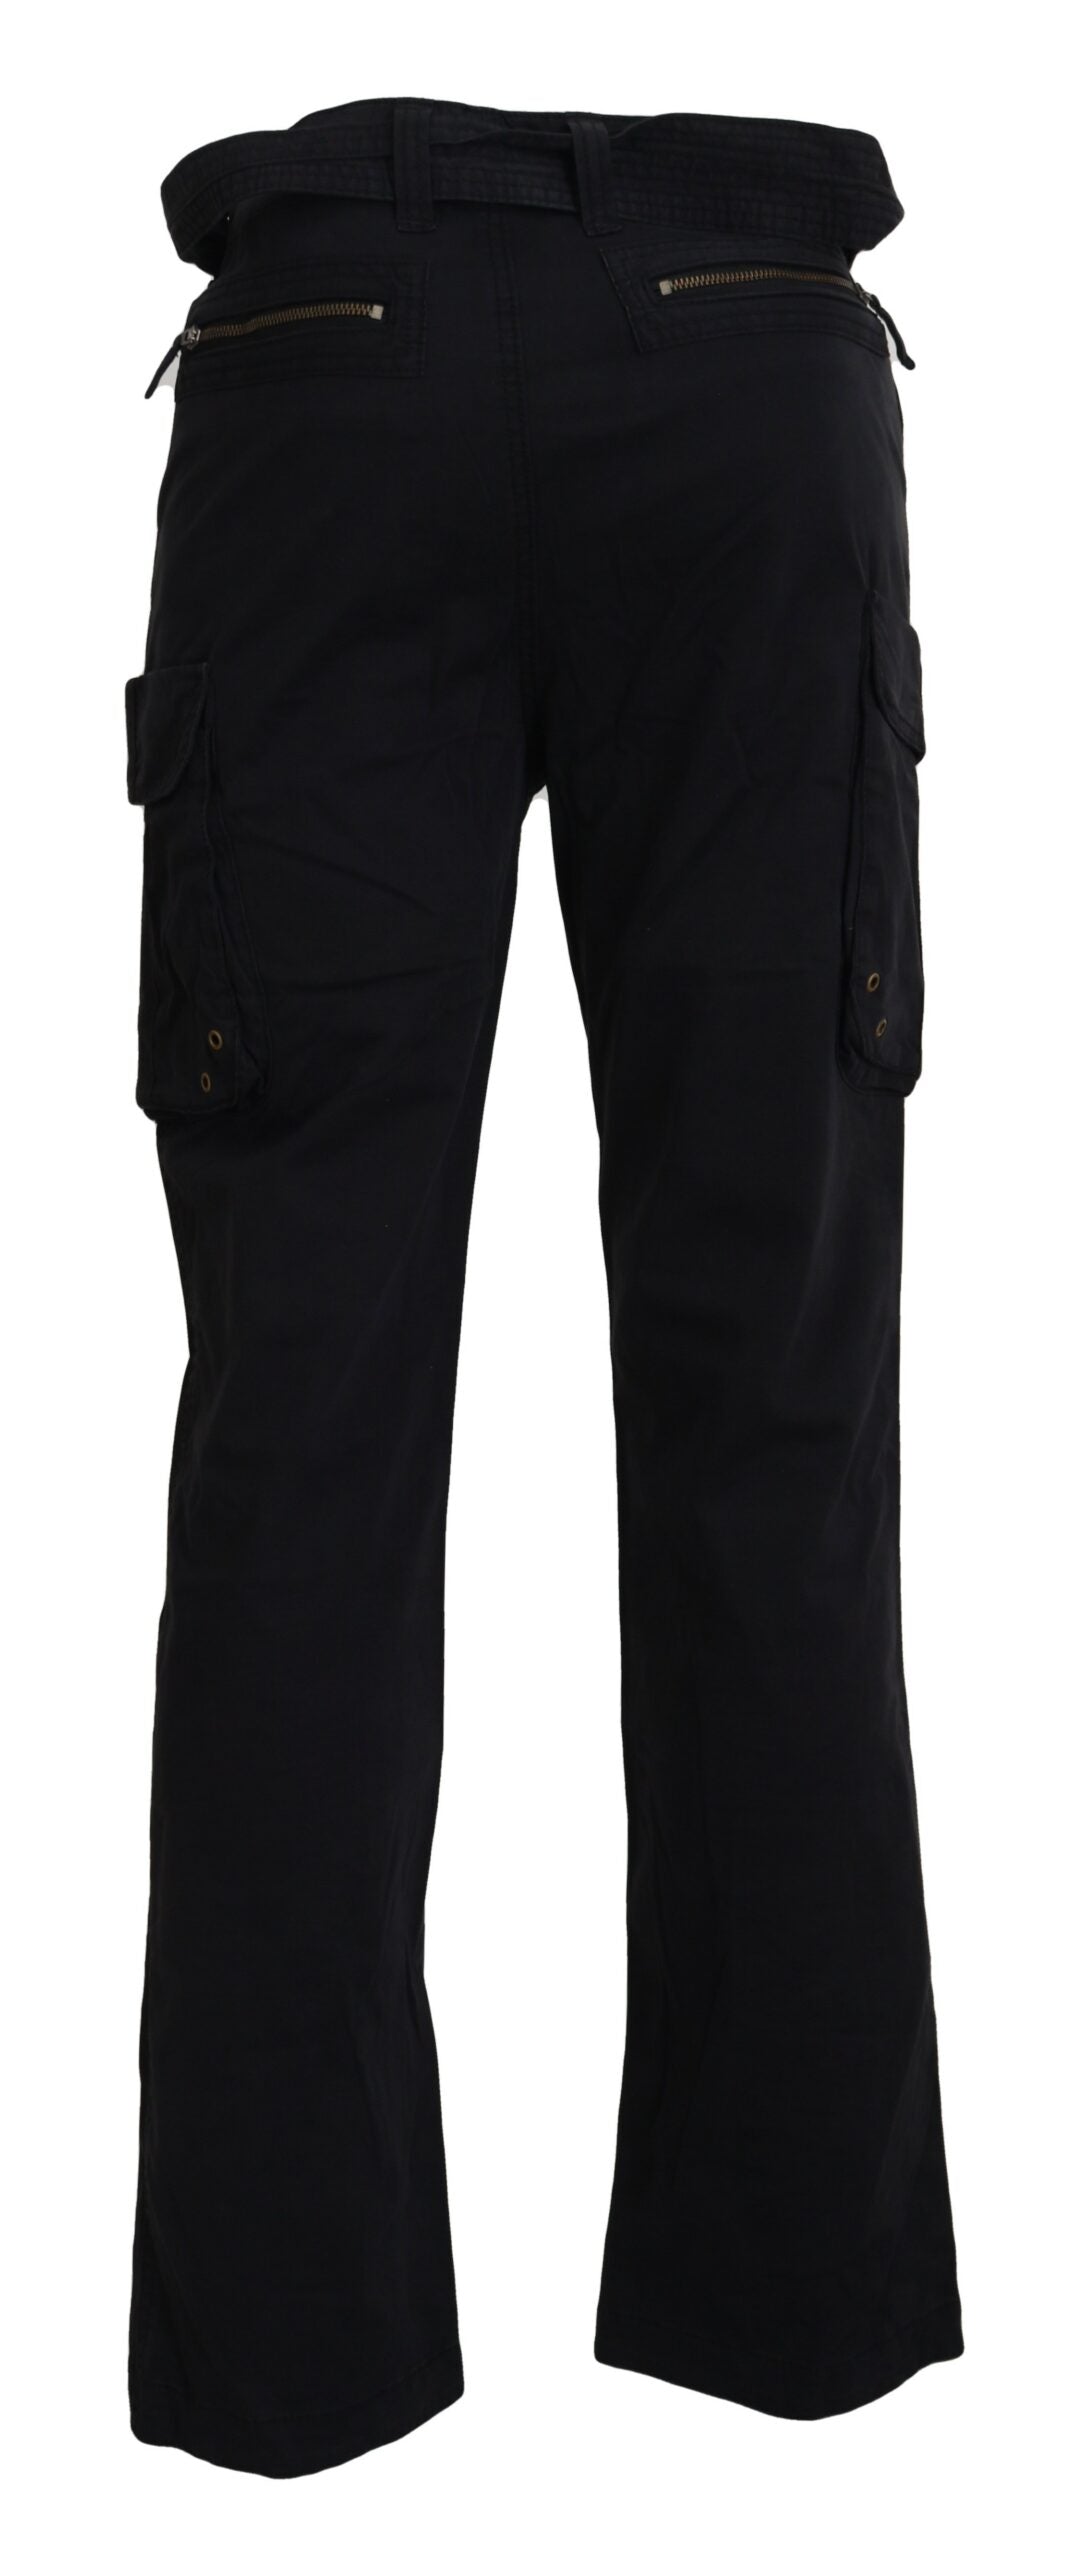 Elegant Black Cargo Pants with Belt